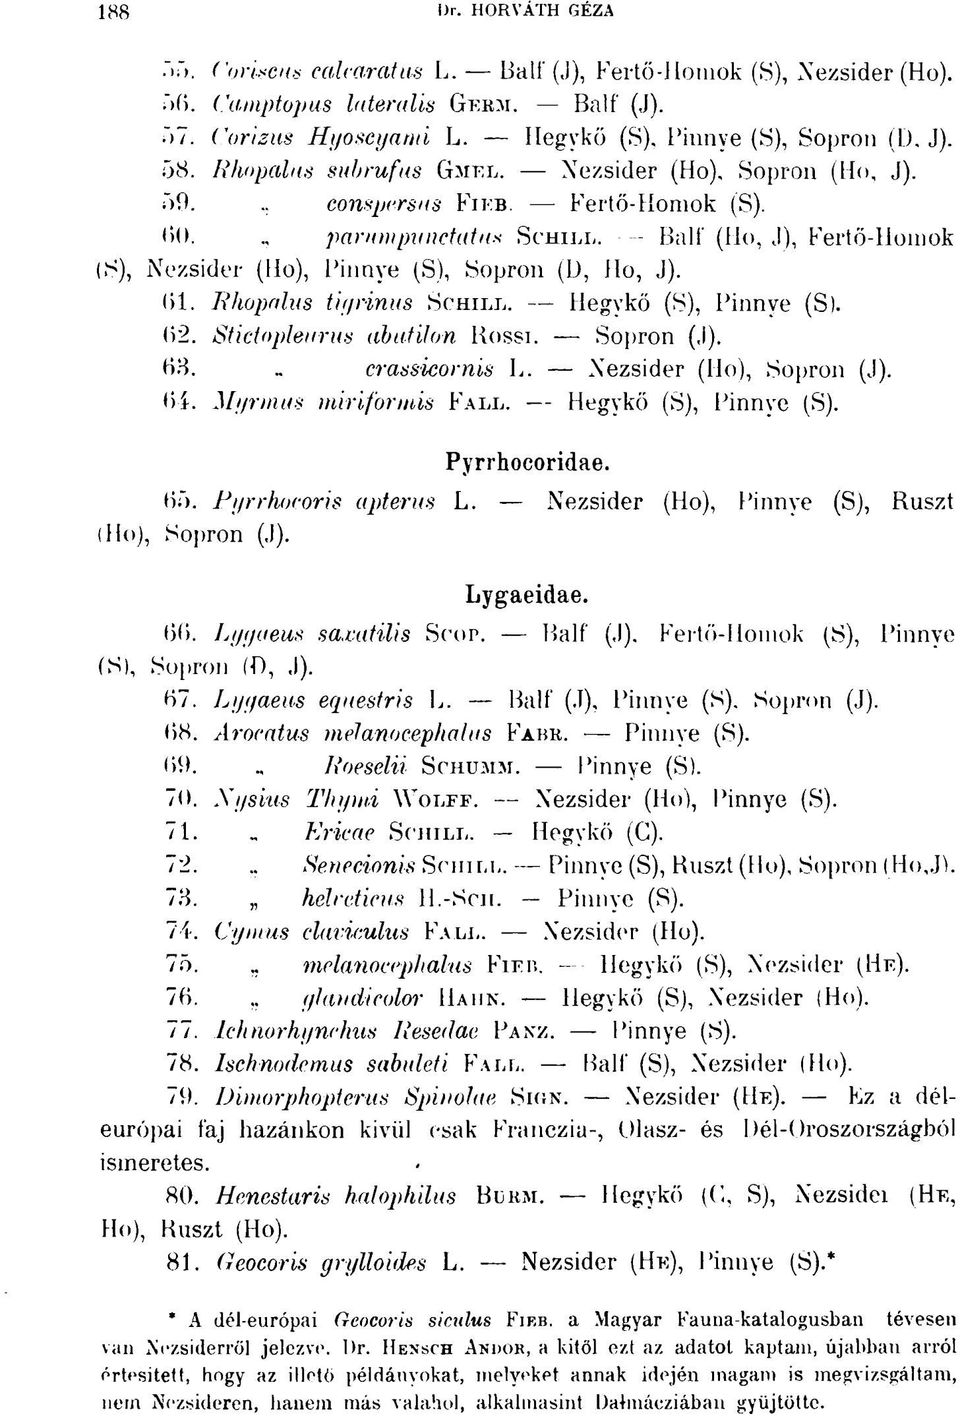 Gl. Rhopalas tiyrinus SCHILL. Hegykő (S), Pinnye (S). 62. Stictopleurus abutilon Bossi. Sopron (J). 63. crassicornis L. Nezsider (Ilo), Sopron (J). 64. Myrmus mir if or mis FALL.